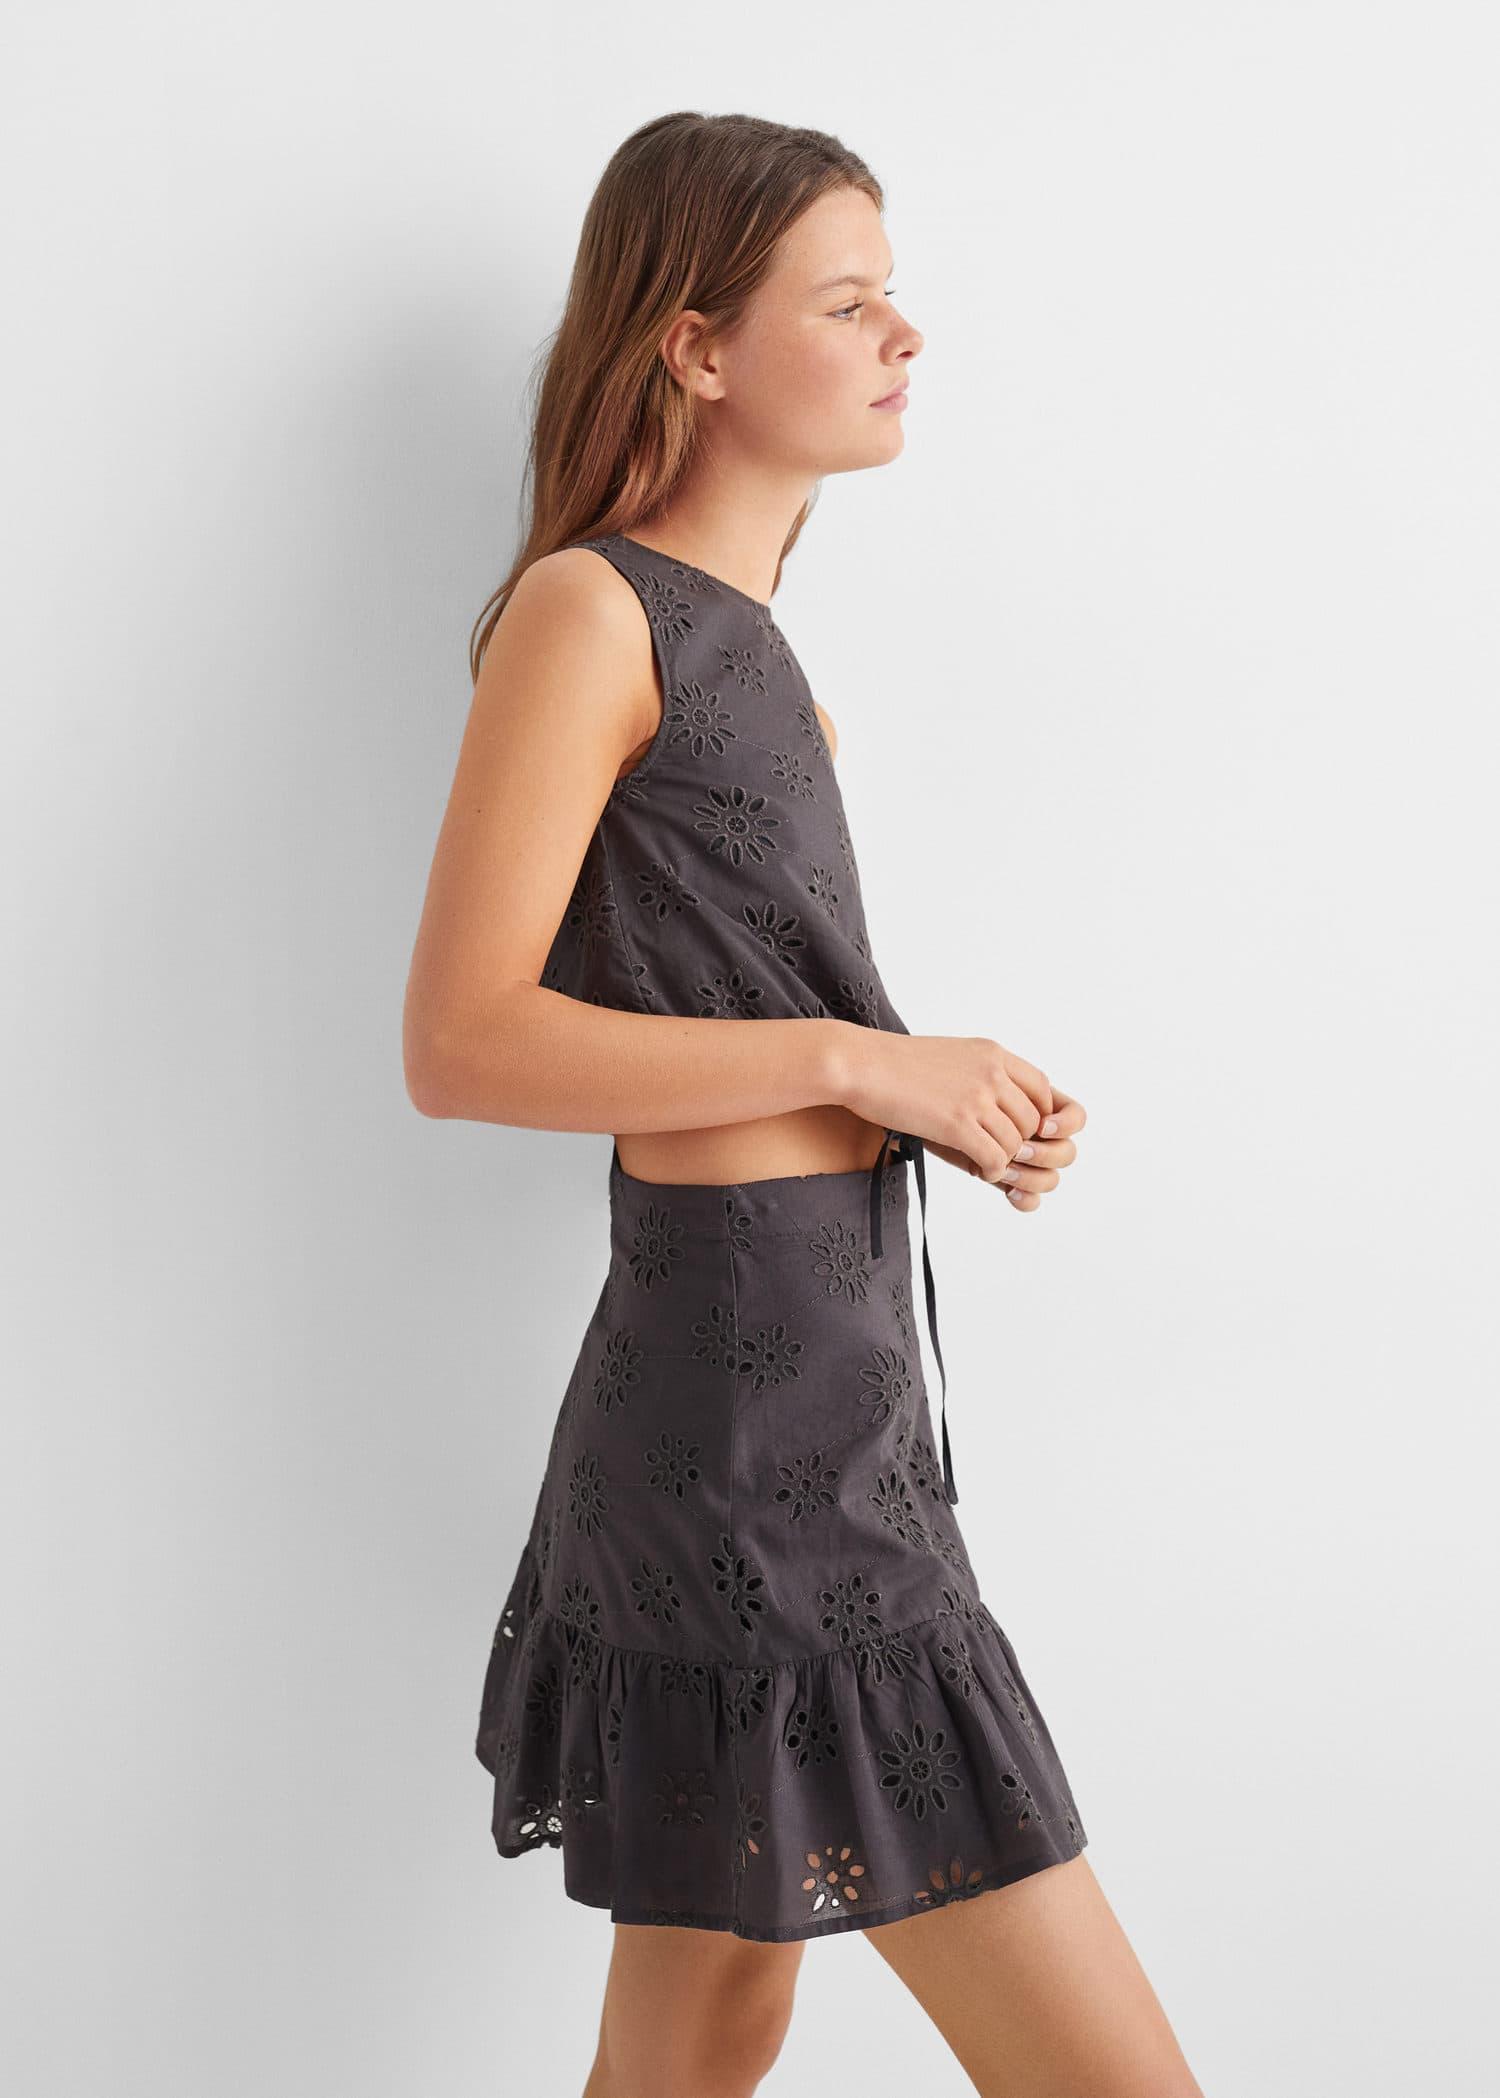 embroidered ruffled skirt